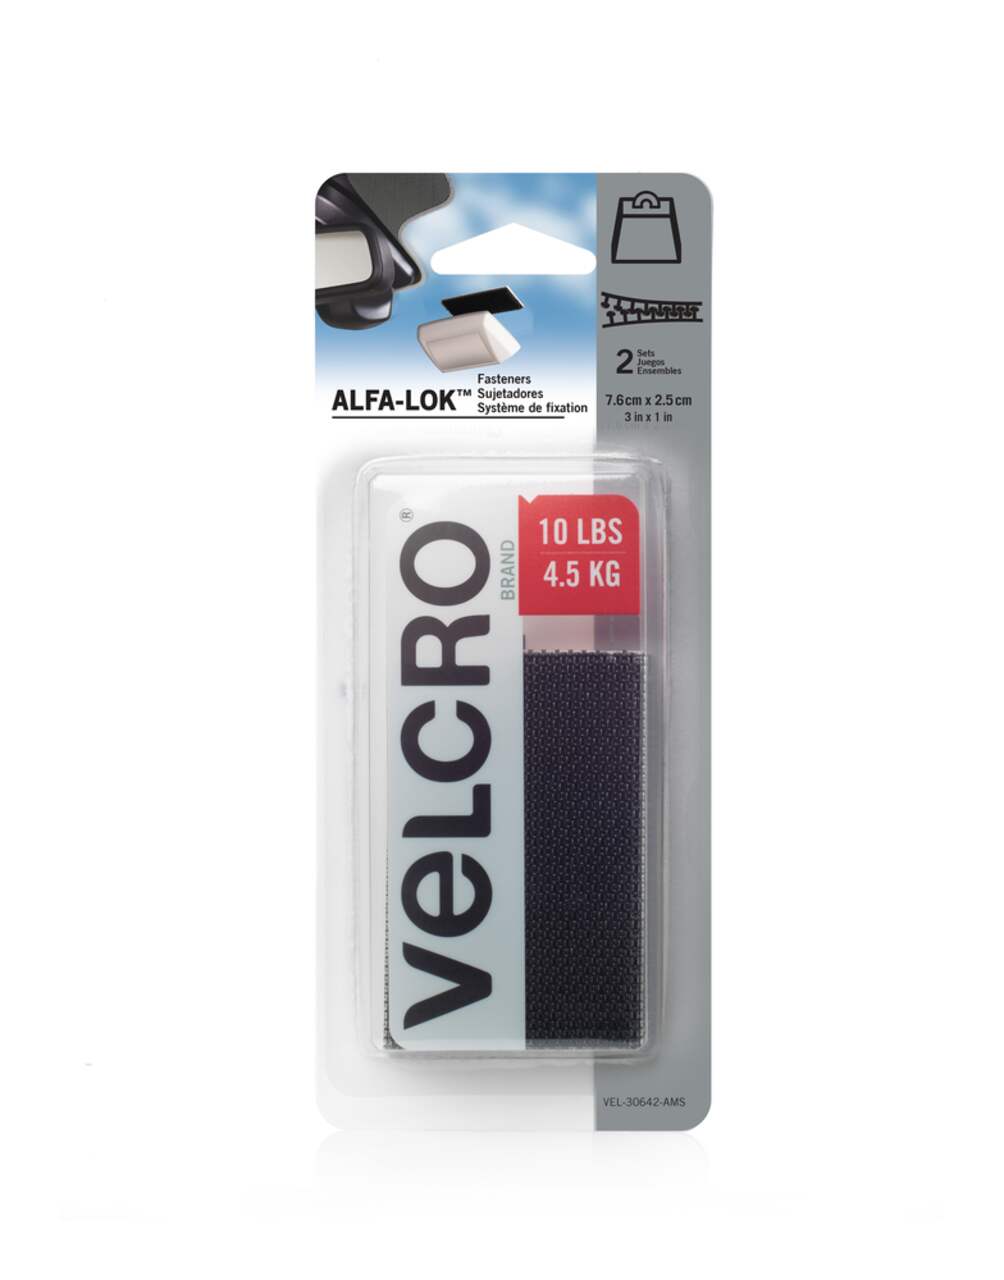 Velcro Brand Industrial Strength 10' x 2 Tape, Black